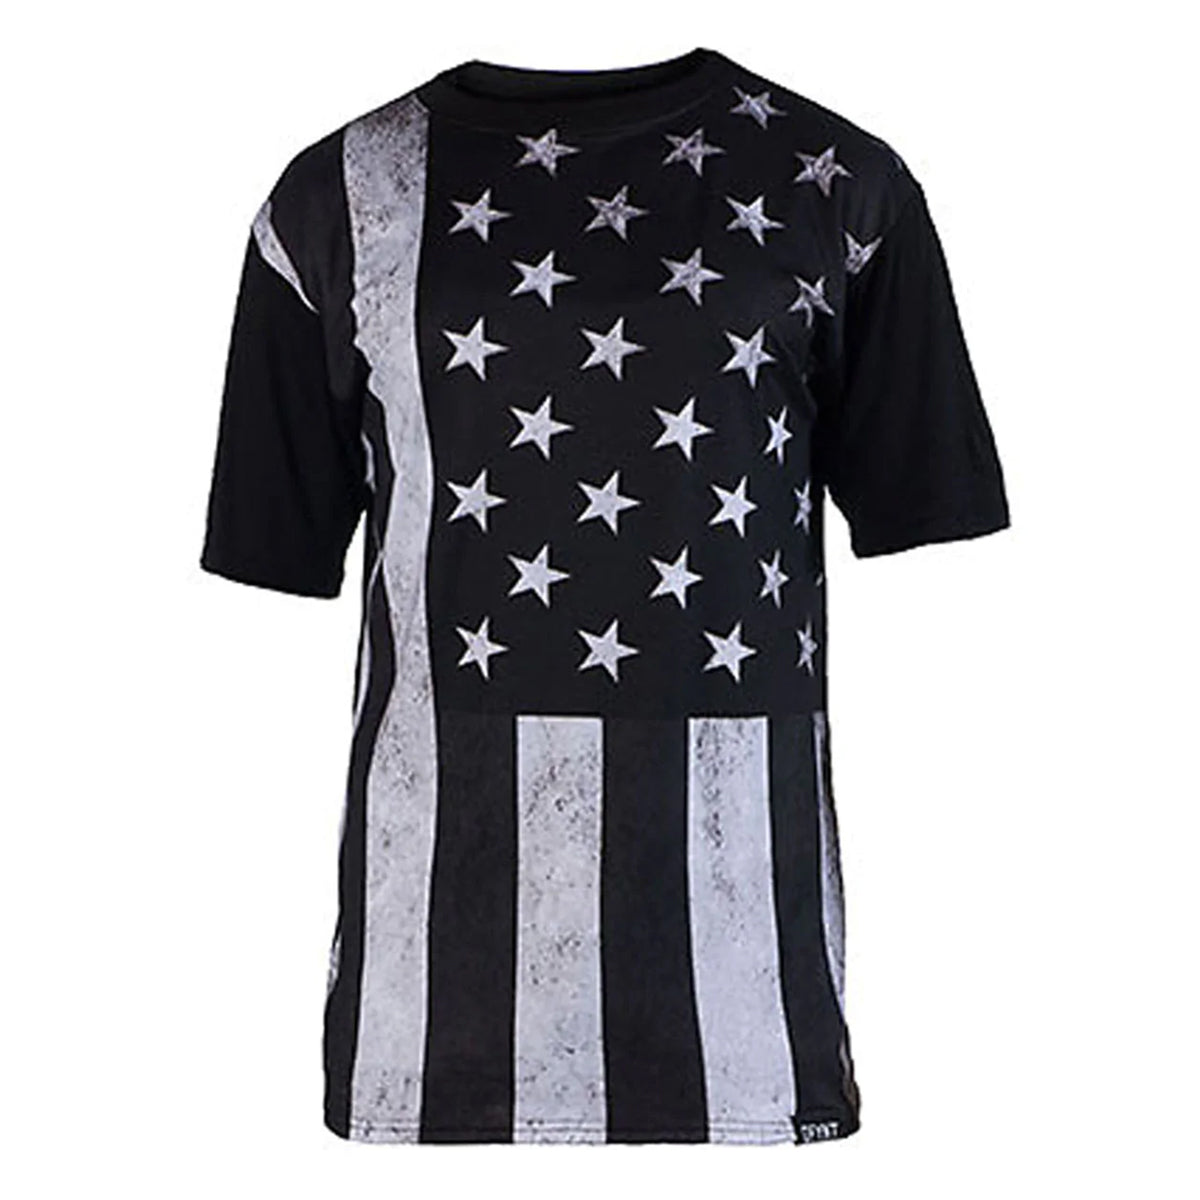 Defyant Sub Black Flag Adult Short-Sleeve Shirts